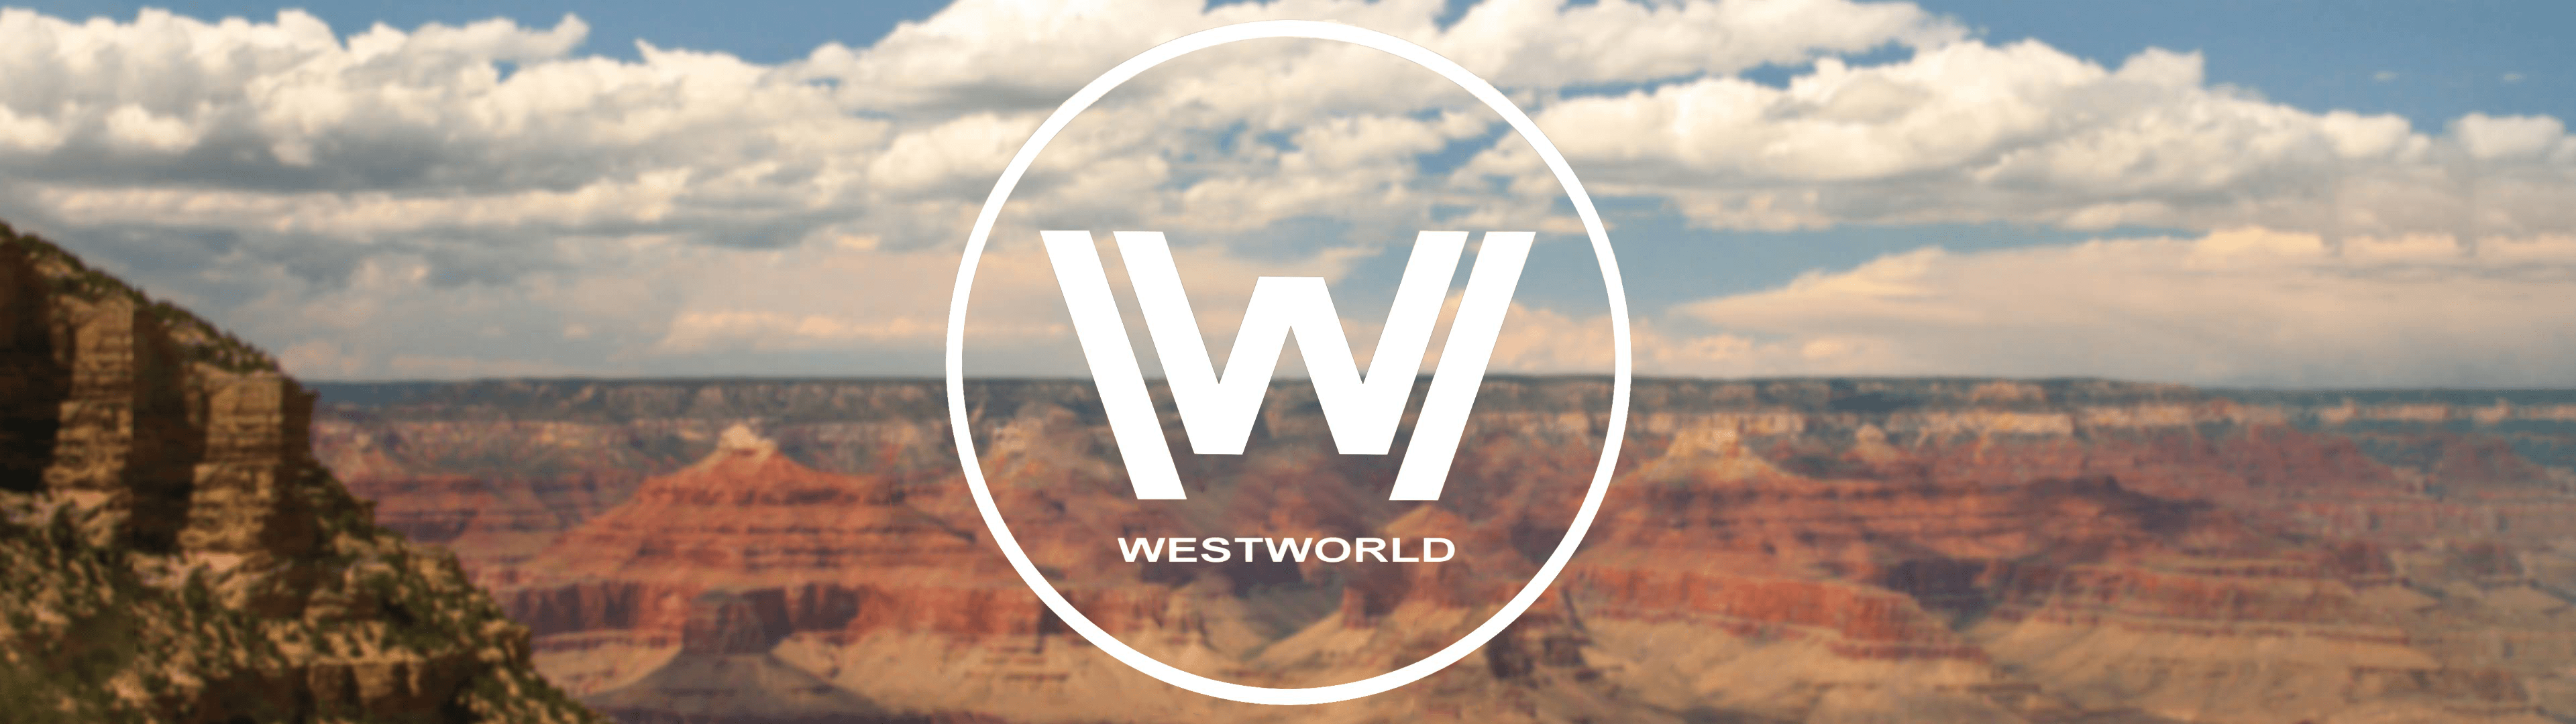 Tweak this Westworld wallpaper to be [3840x1080]?